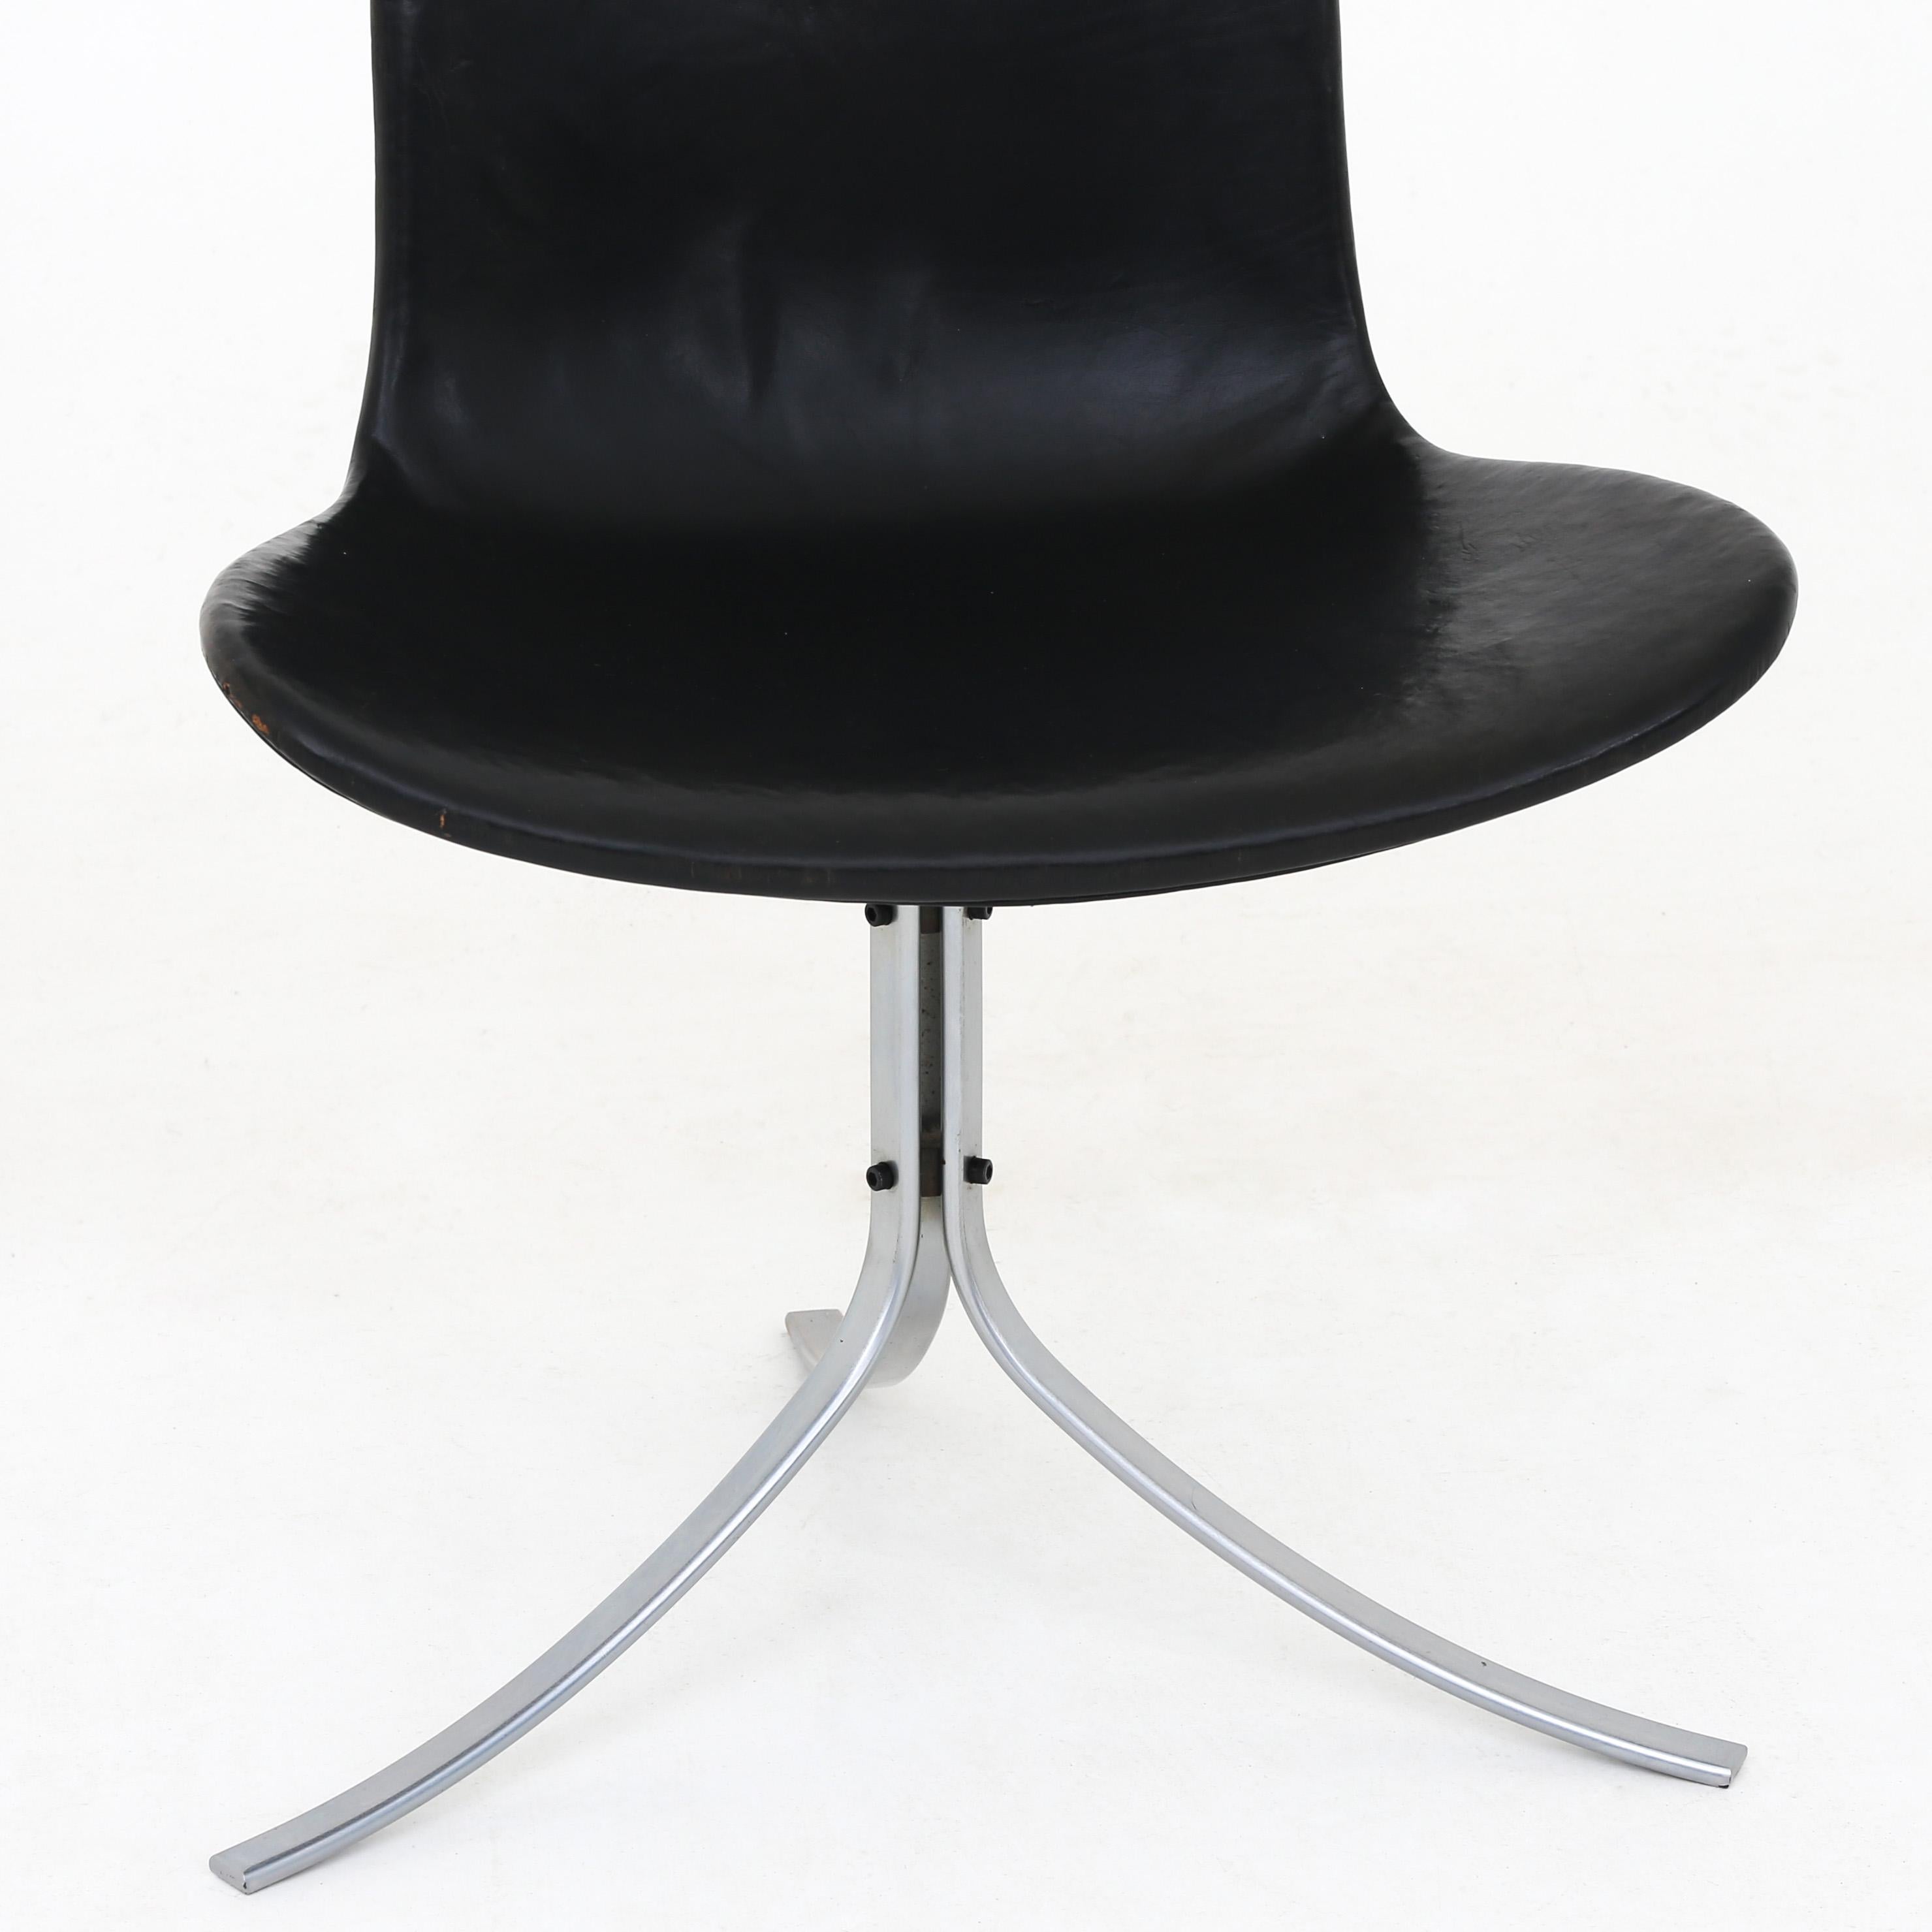 Scandinavian Modern PK 9 Tulip chair by Poul Kjærholm